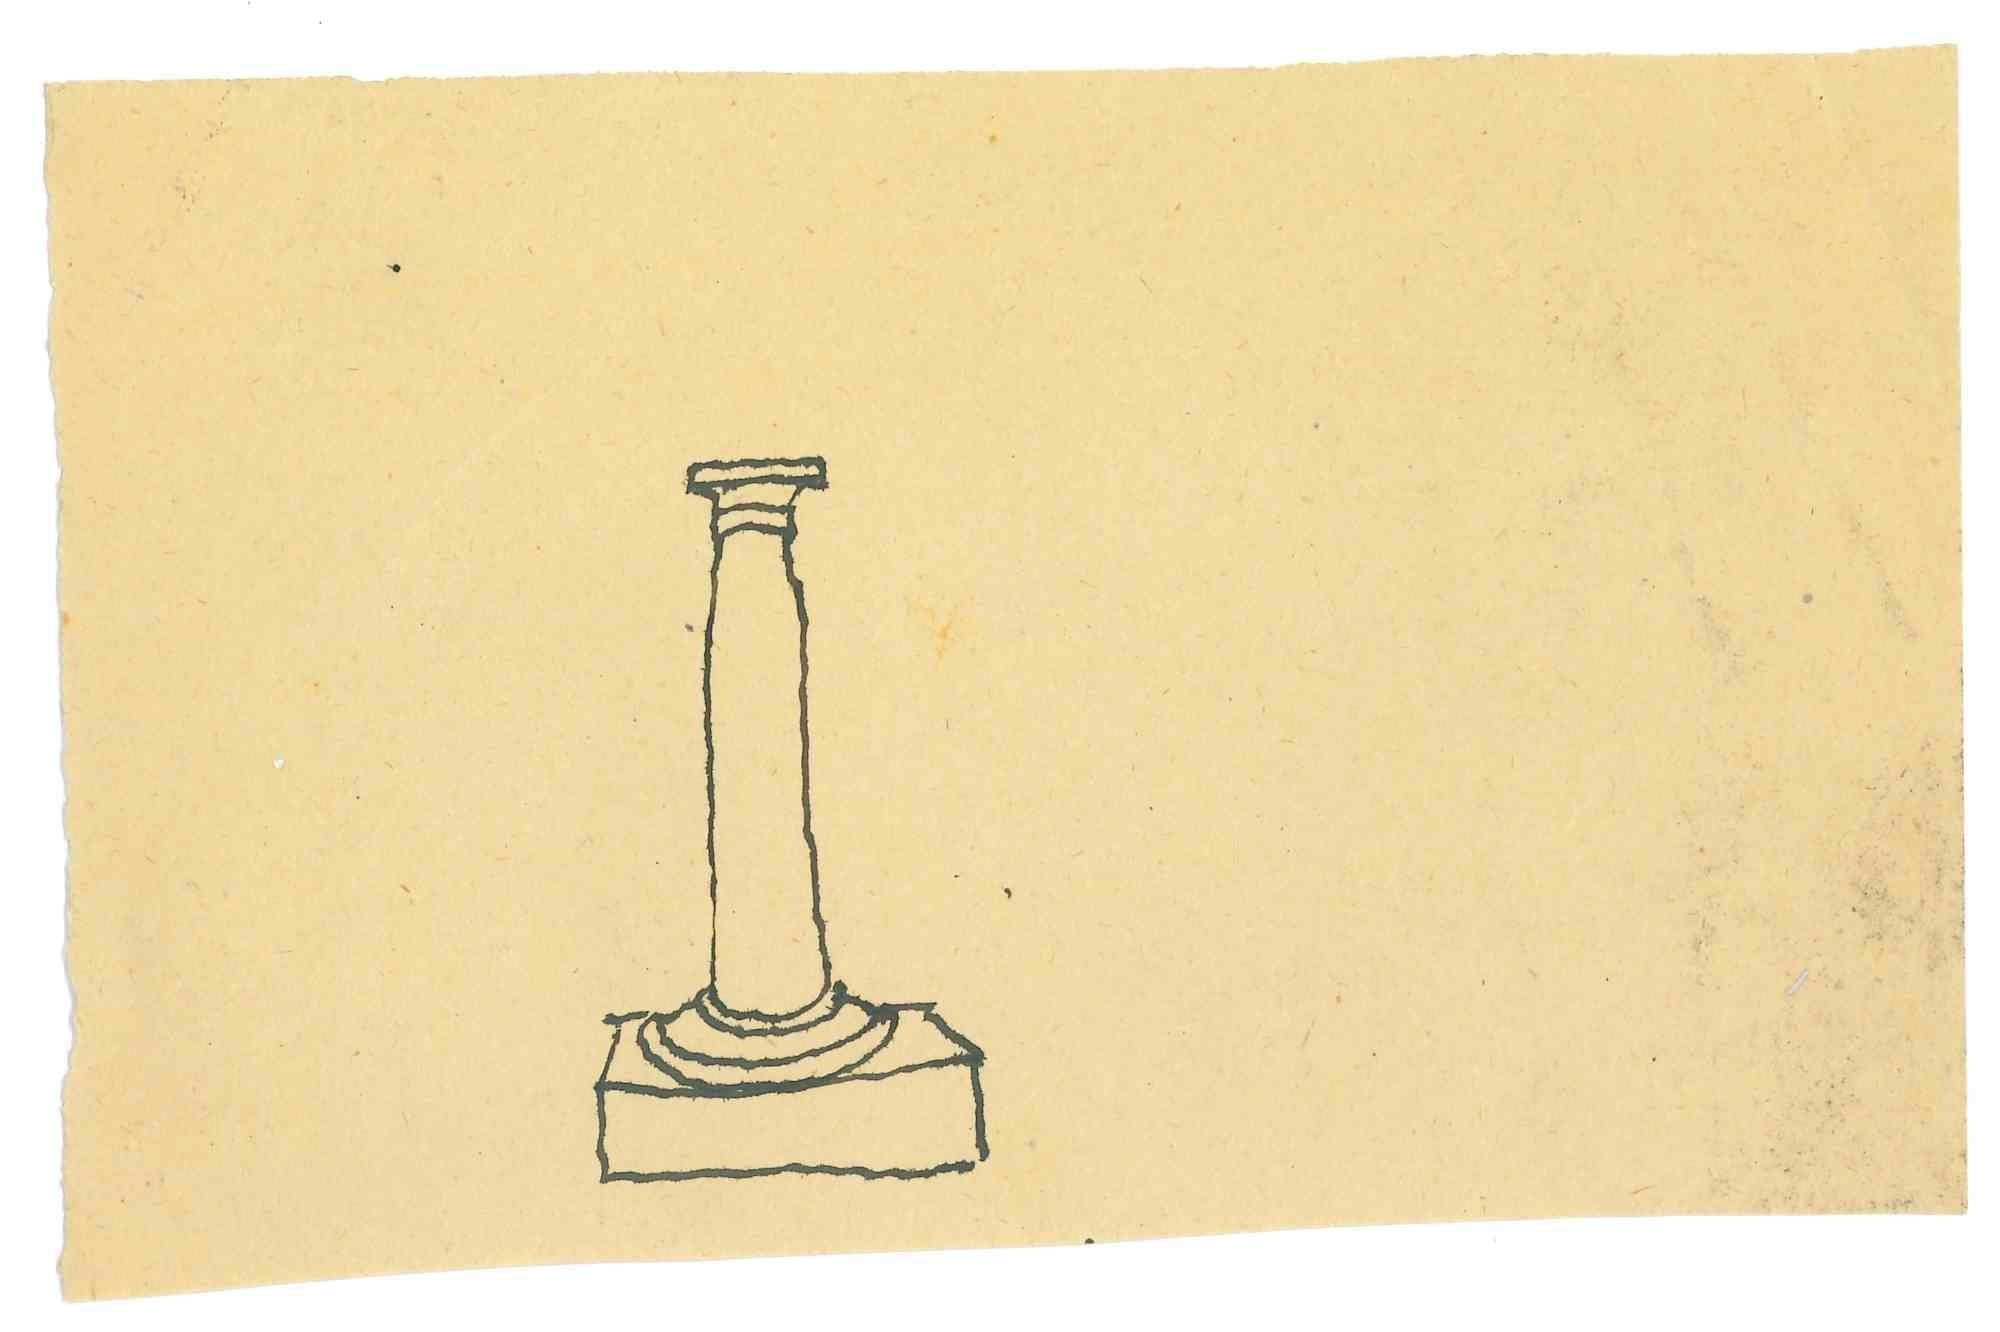  Mino Maccari Figurative Art - The Roman Column - Drawing in Pen - Mid 20th Century